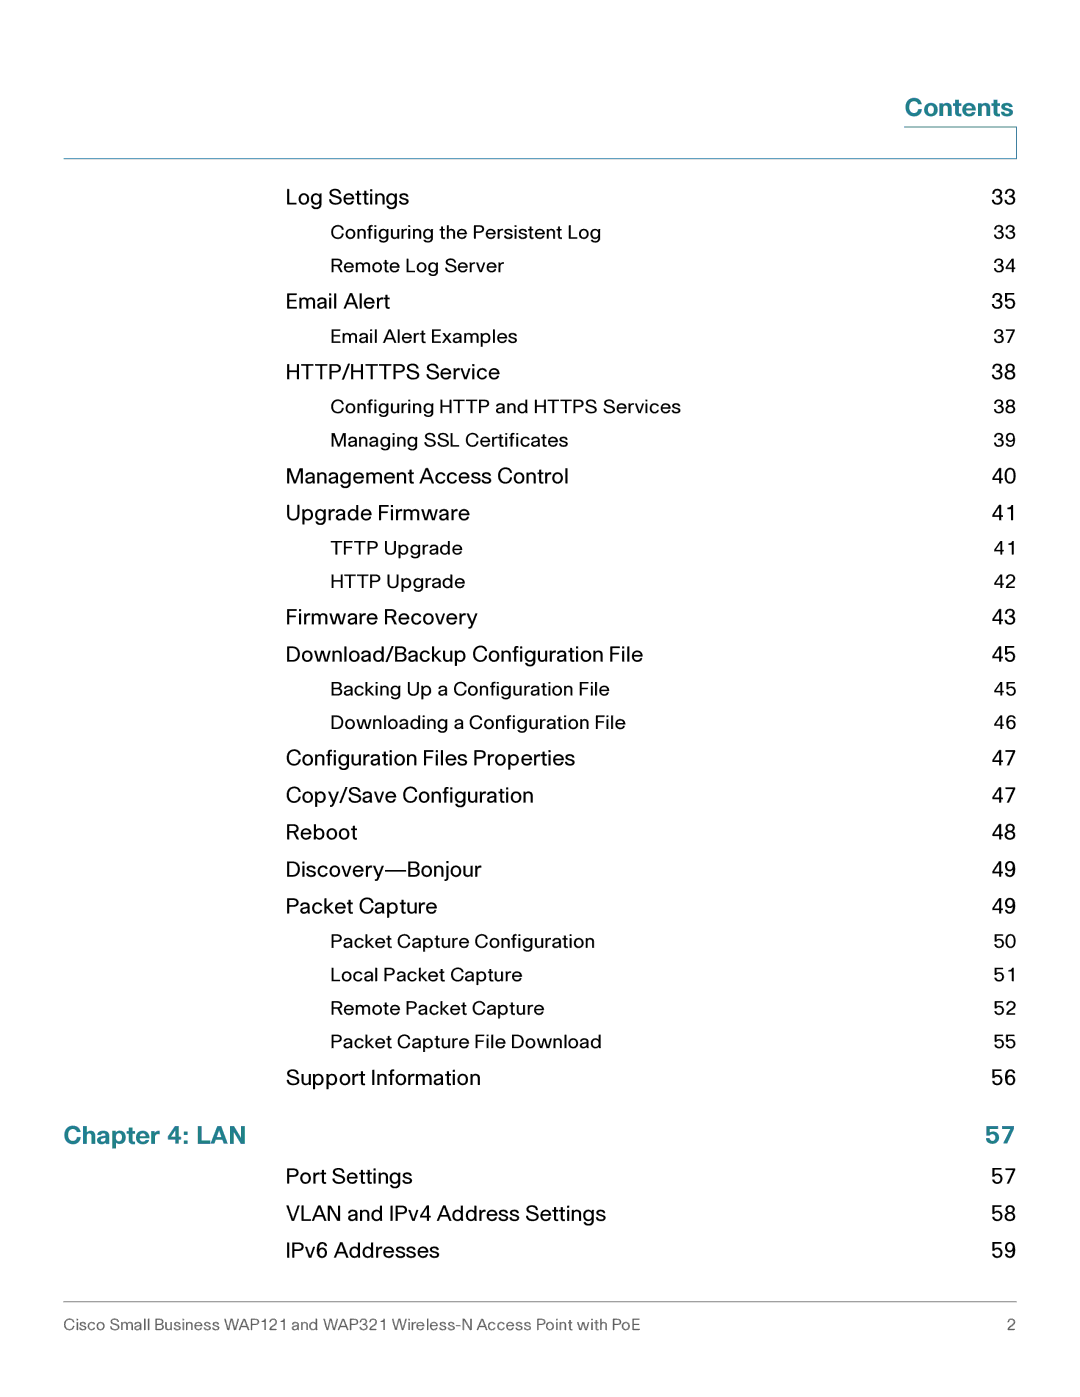 Cisco Systems WAP121, WAP321 manual Contents, Lan 